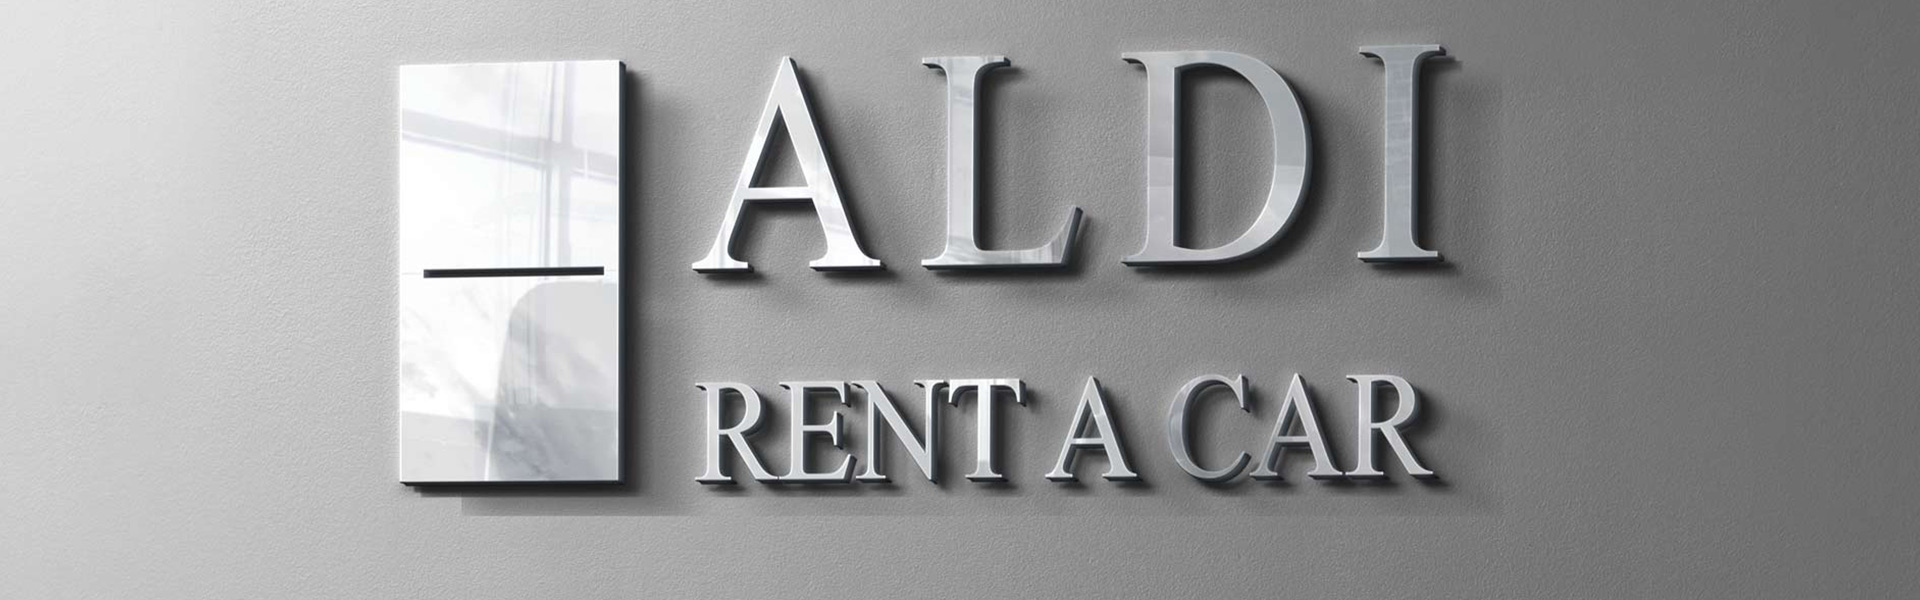 Rent a car Beograd ALDI | Ginekolosko akuserska klinika